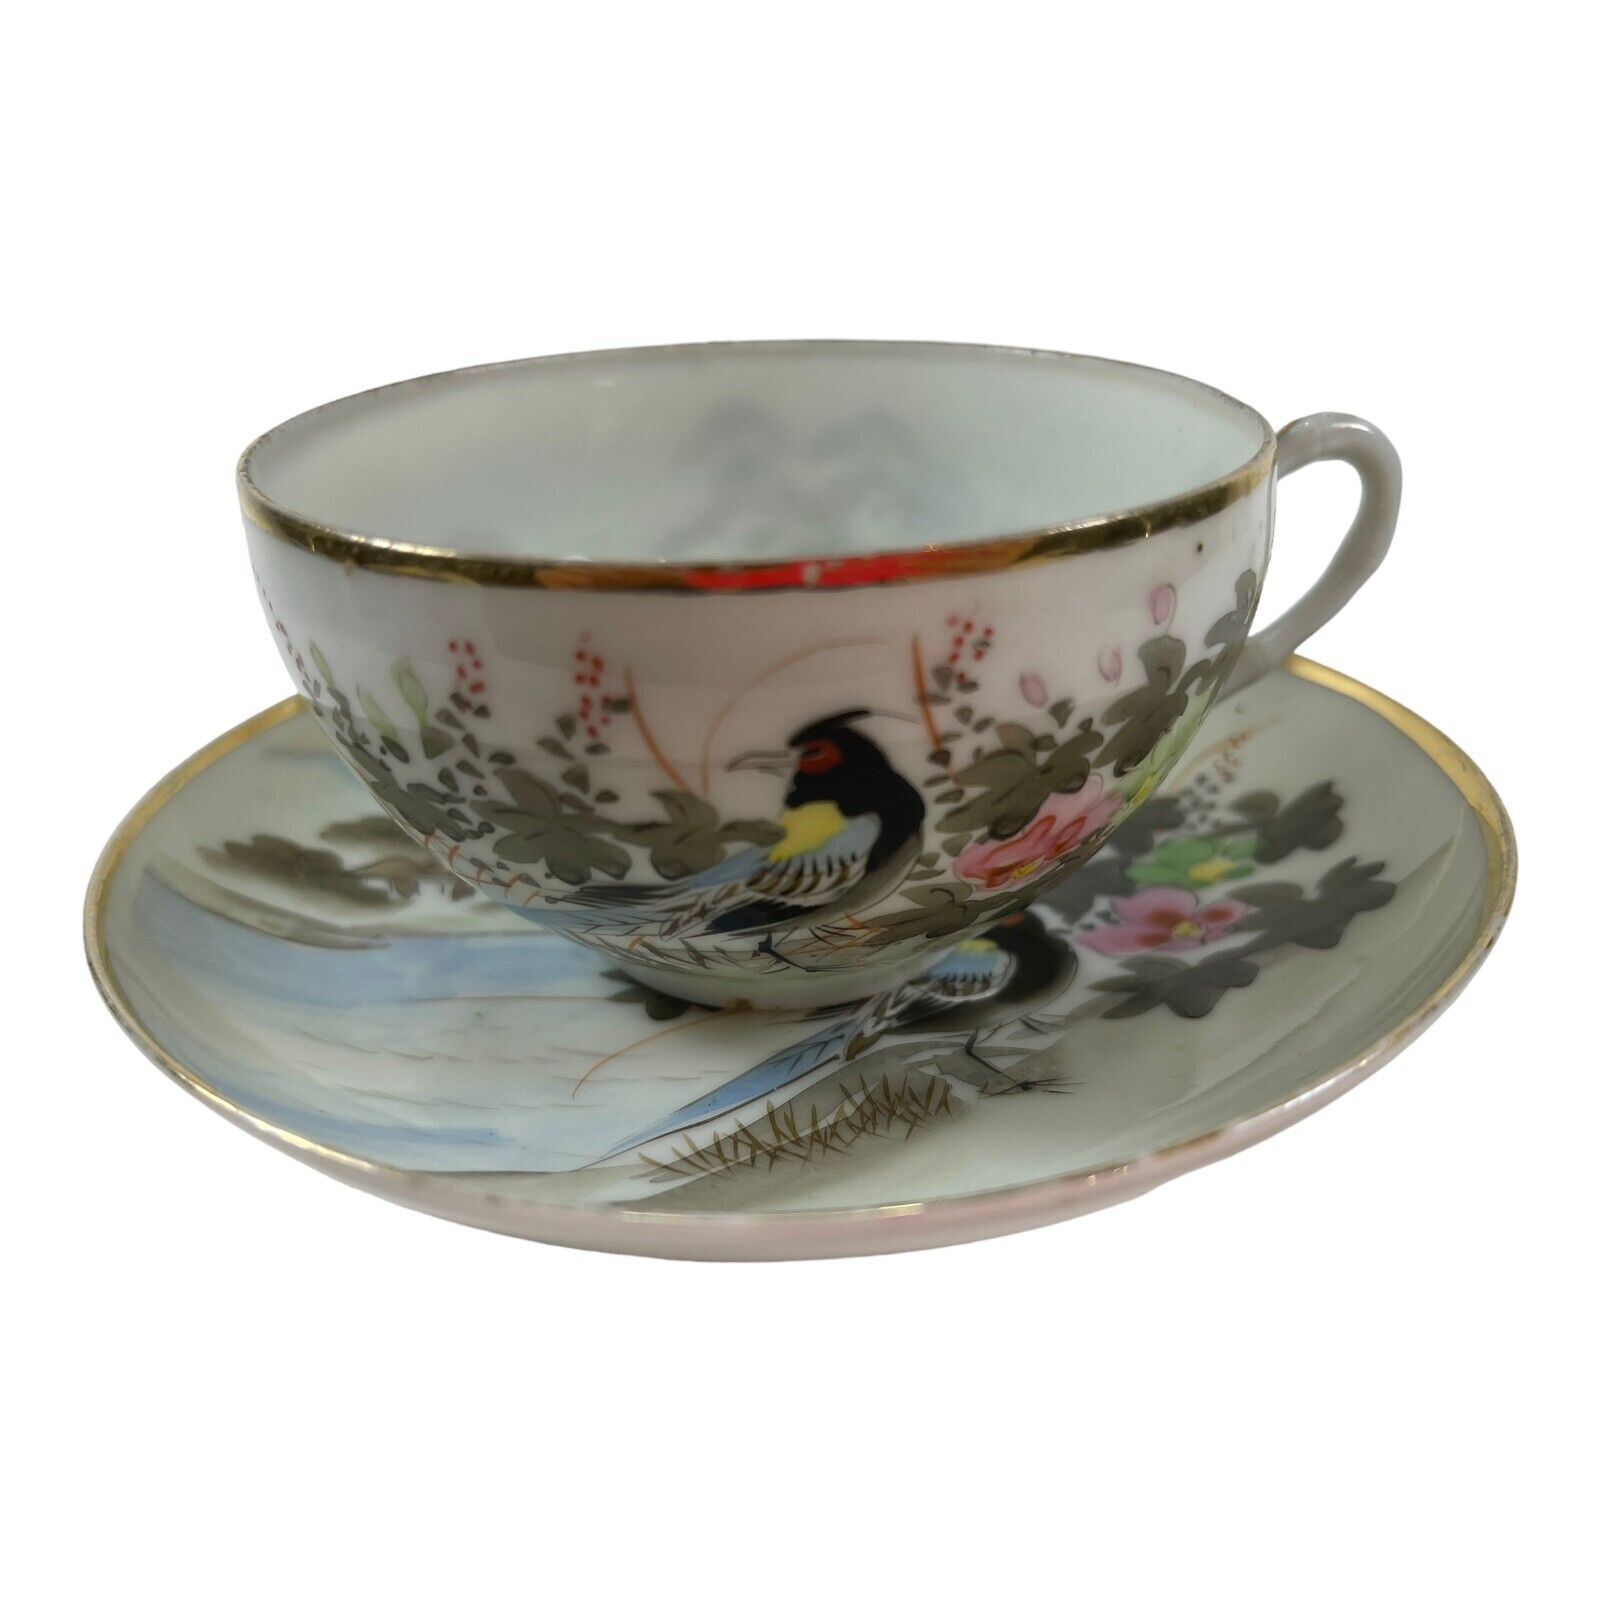 Vintage White Porcelain Teacup & Saucer Set Collectibles Floral And Bird Design